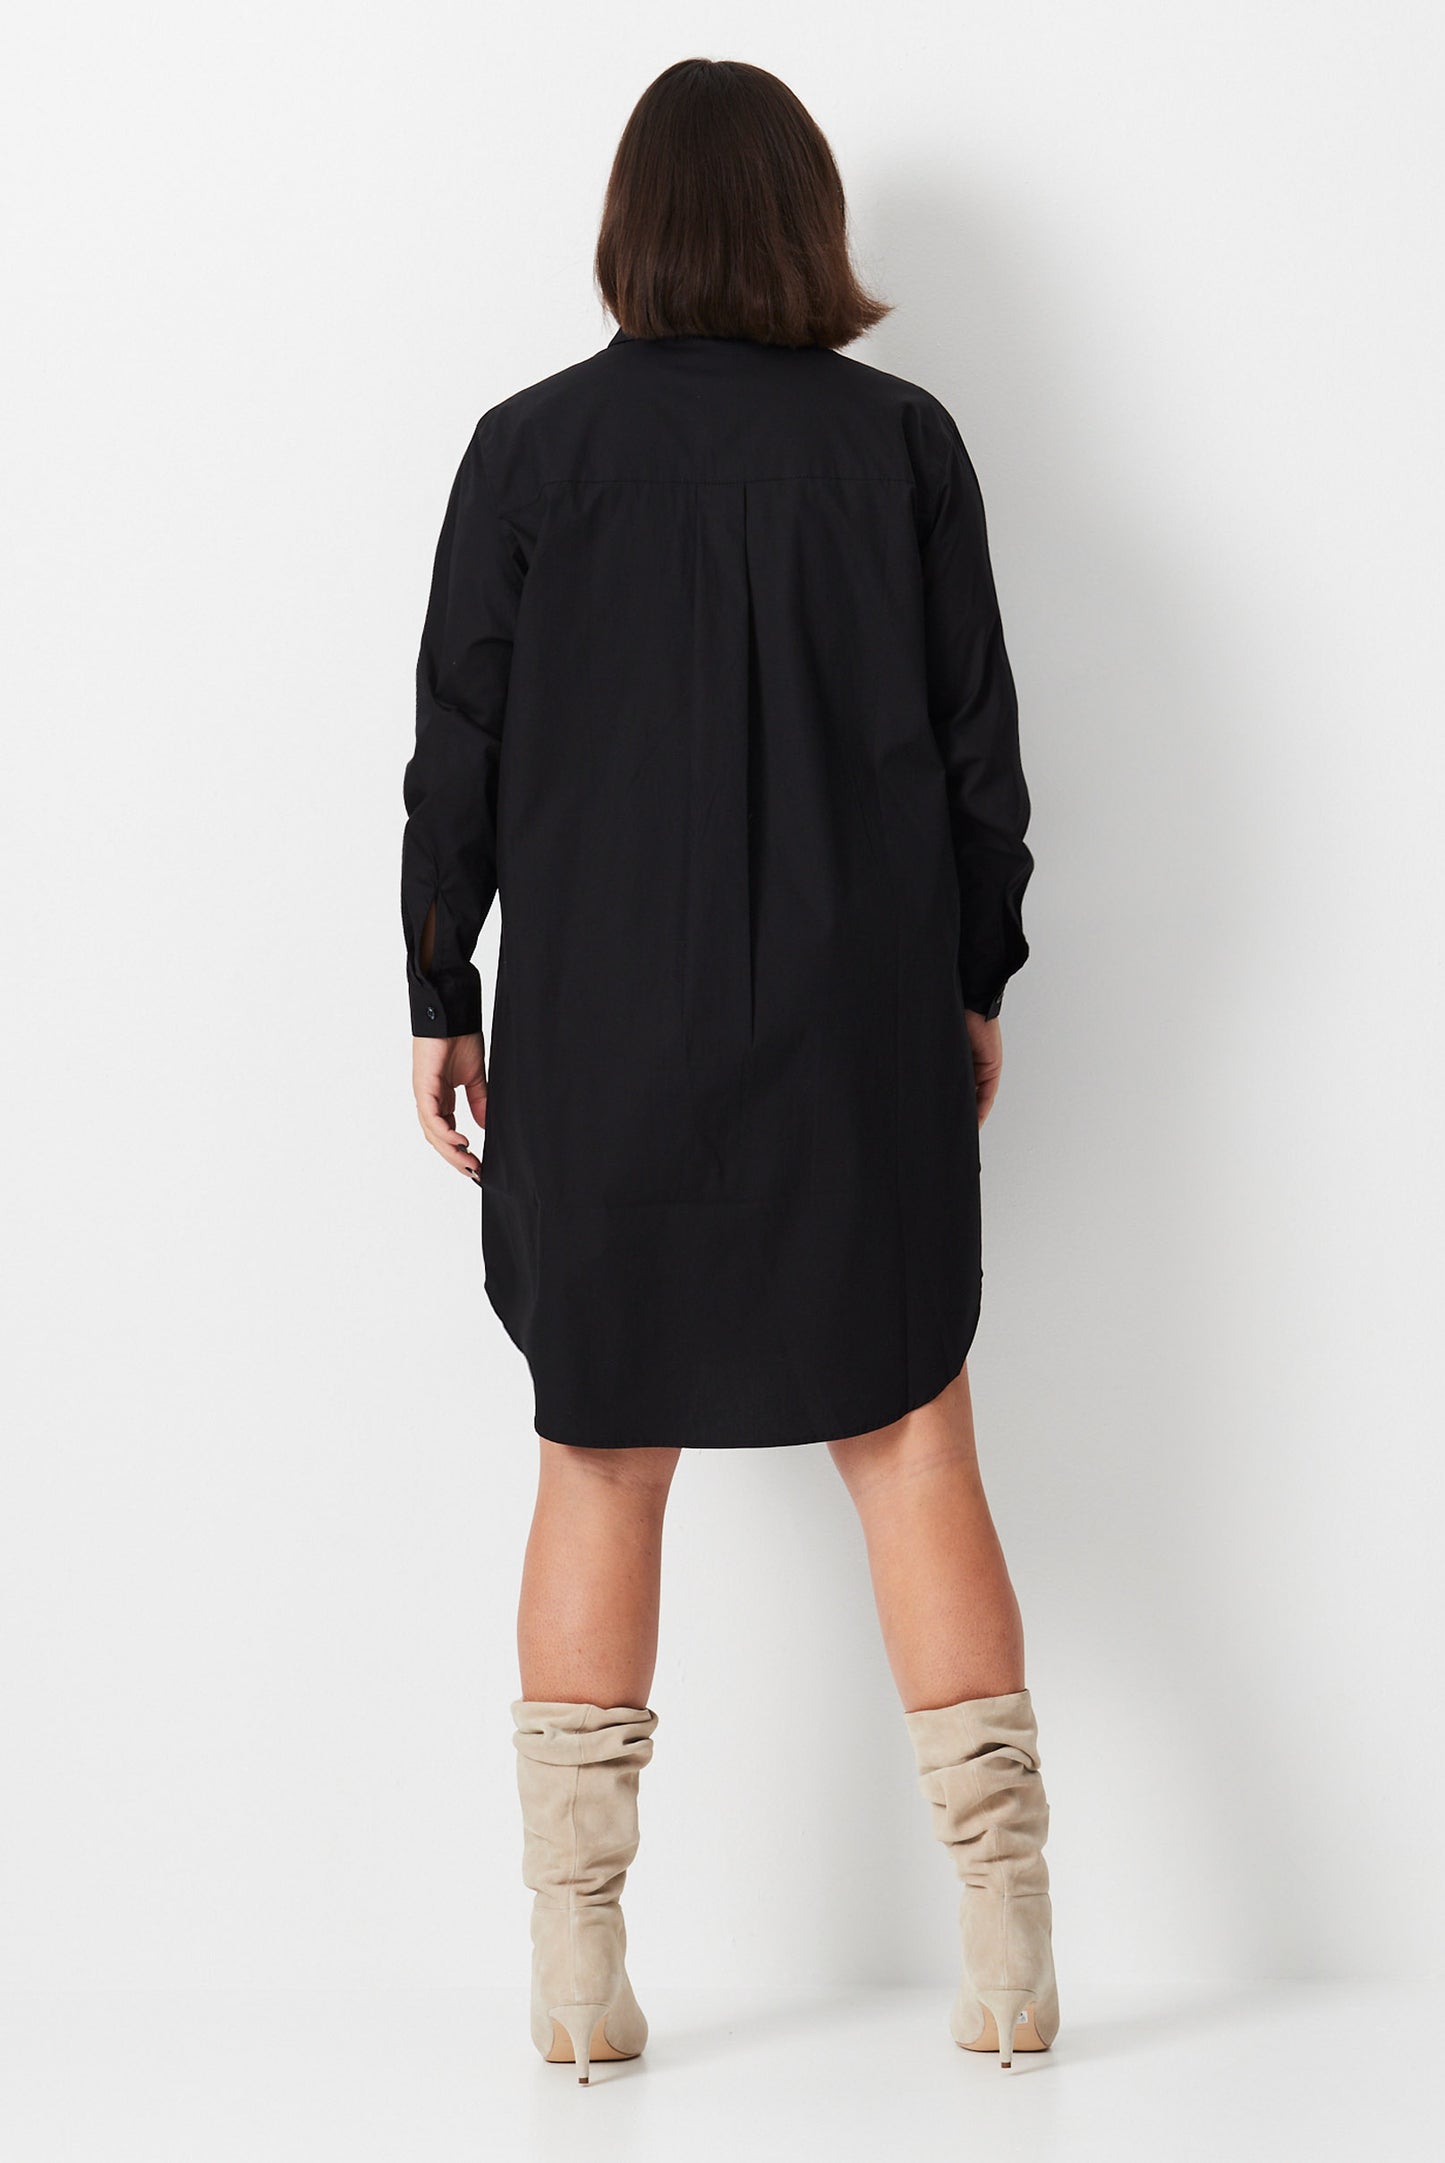 Model wears black plus size shirt dress made from organic cotton